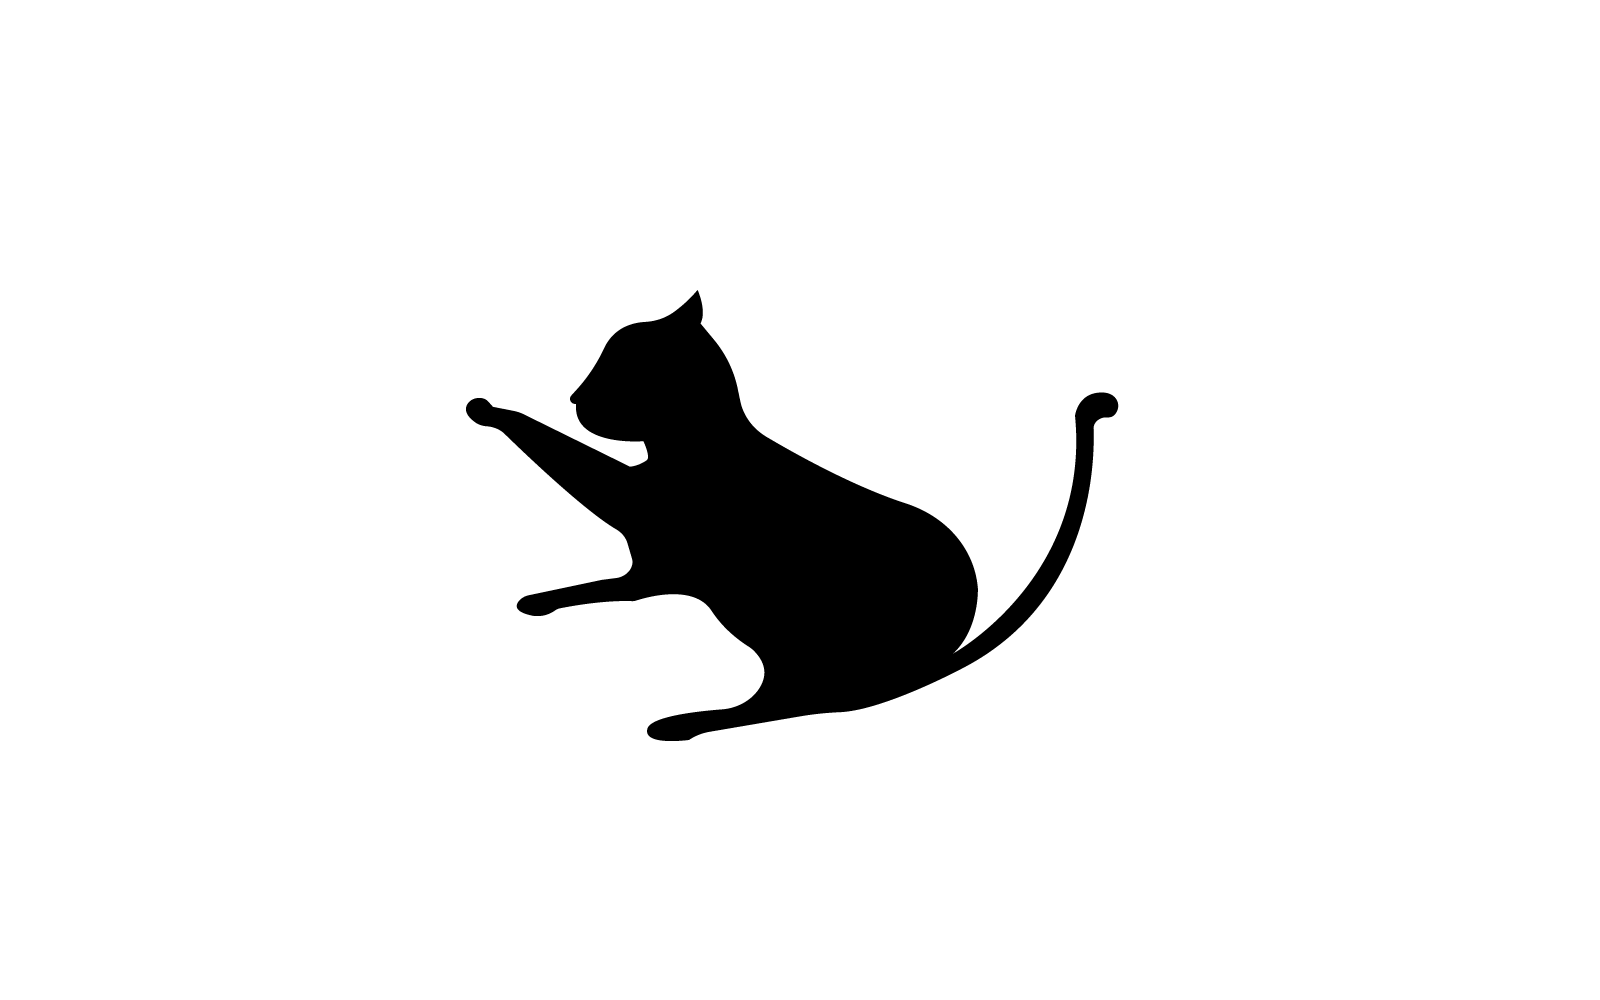 Design-Vektorvorlage für Katzenlogo-Illustration